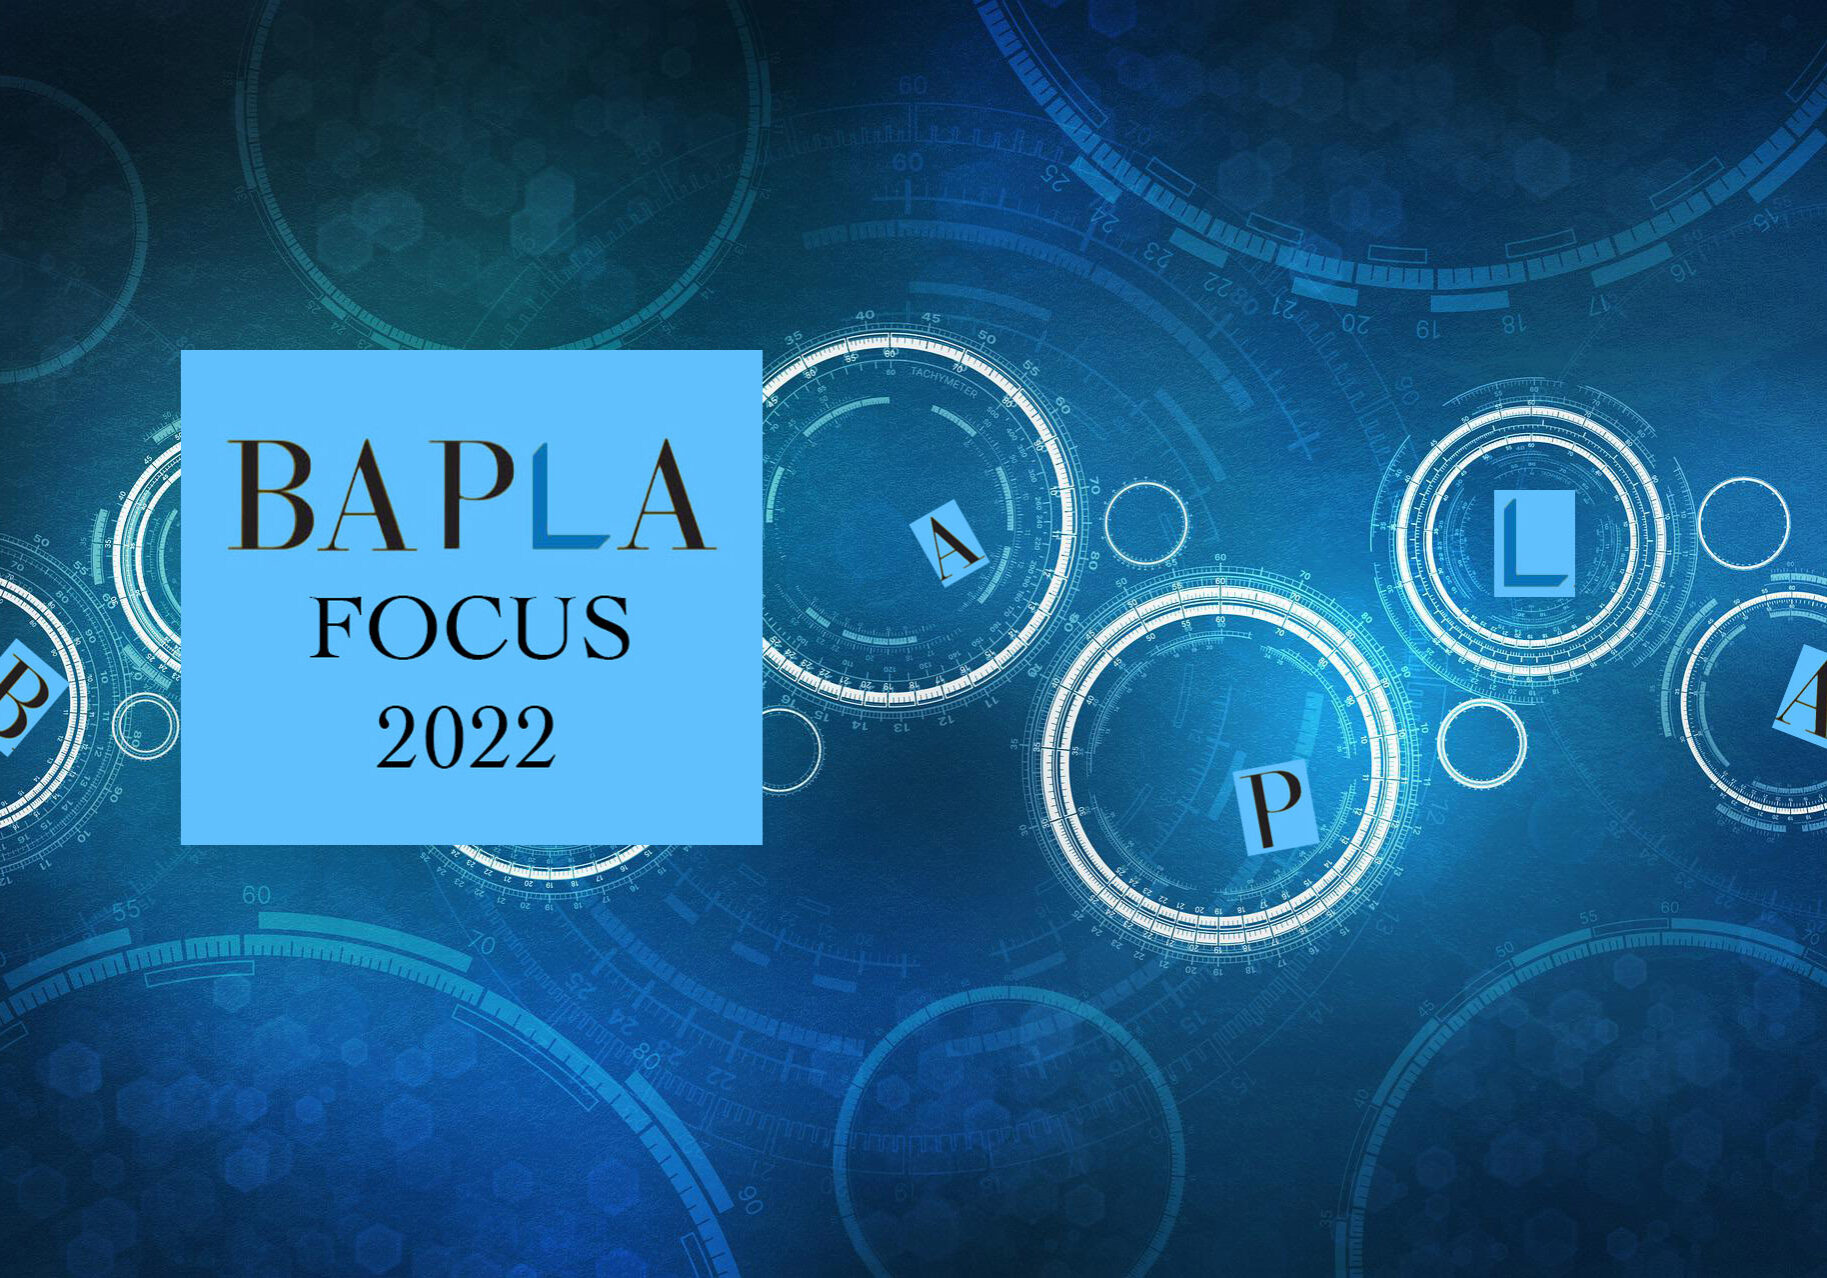 BAPLA FOCUS Circles